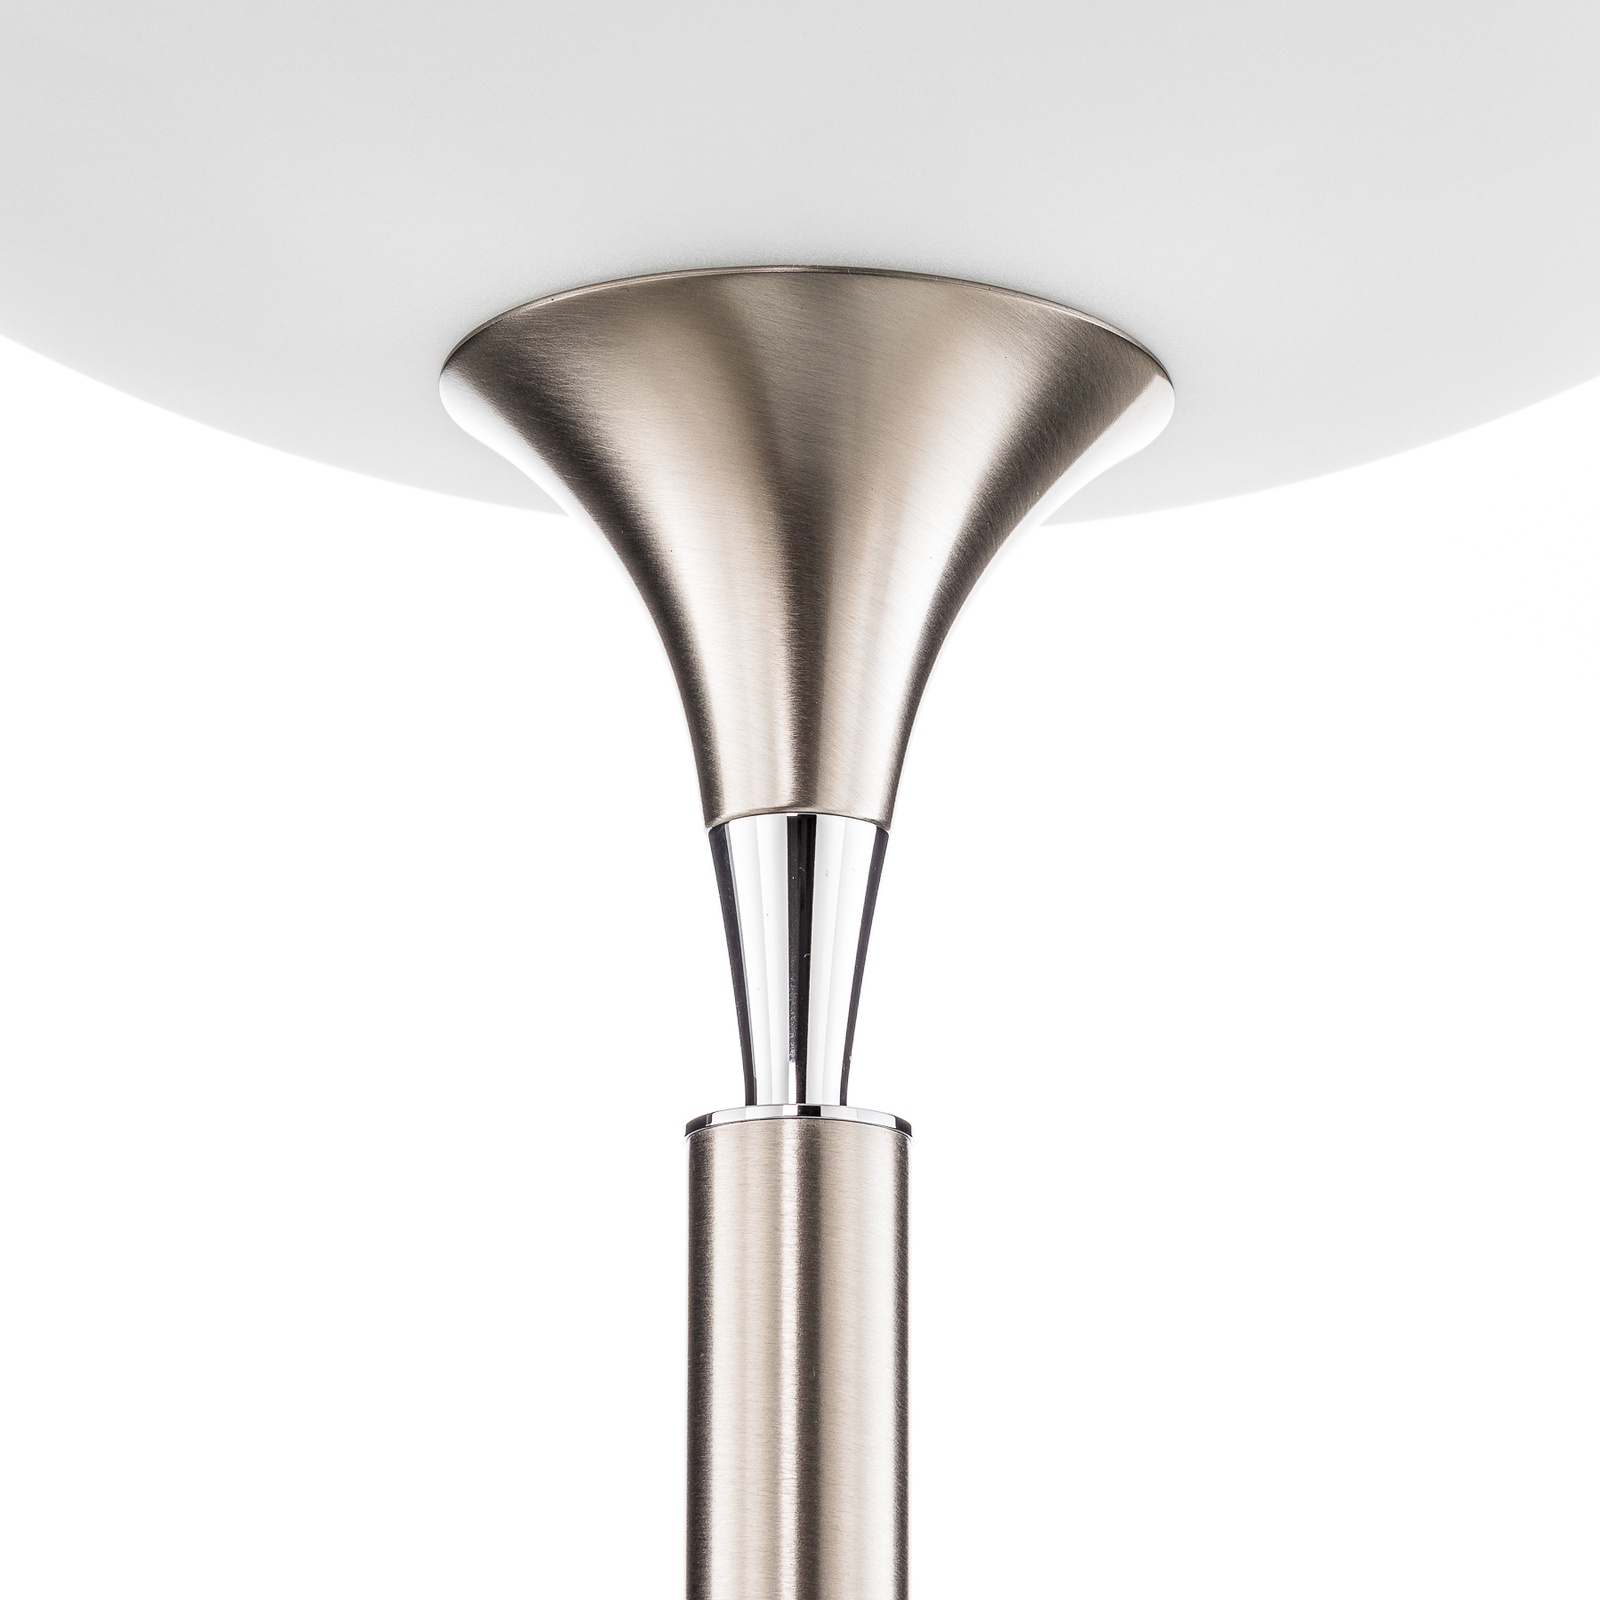 BANKAMP Opera LED uplighter floor lamp, touch dimmer, nickel